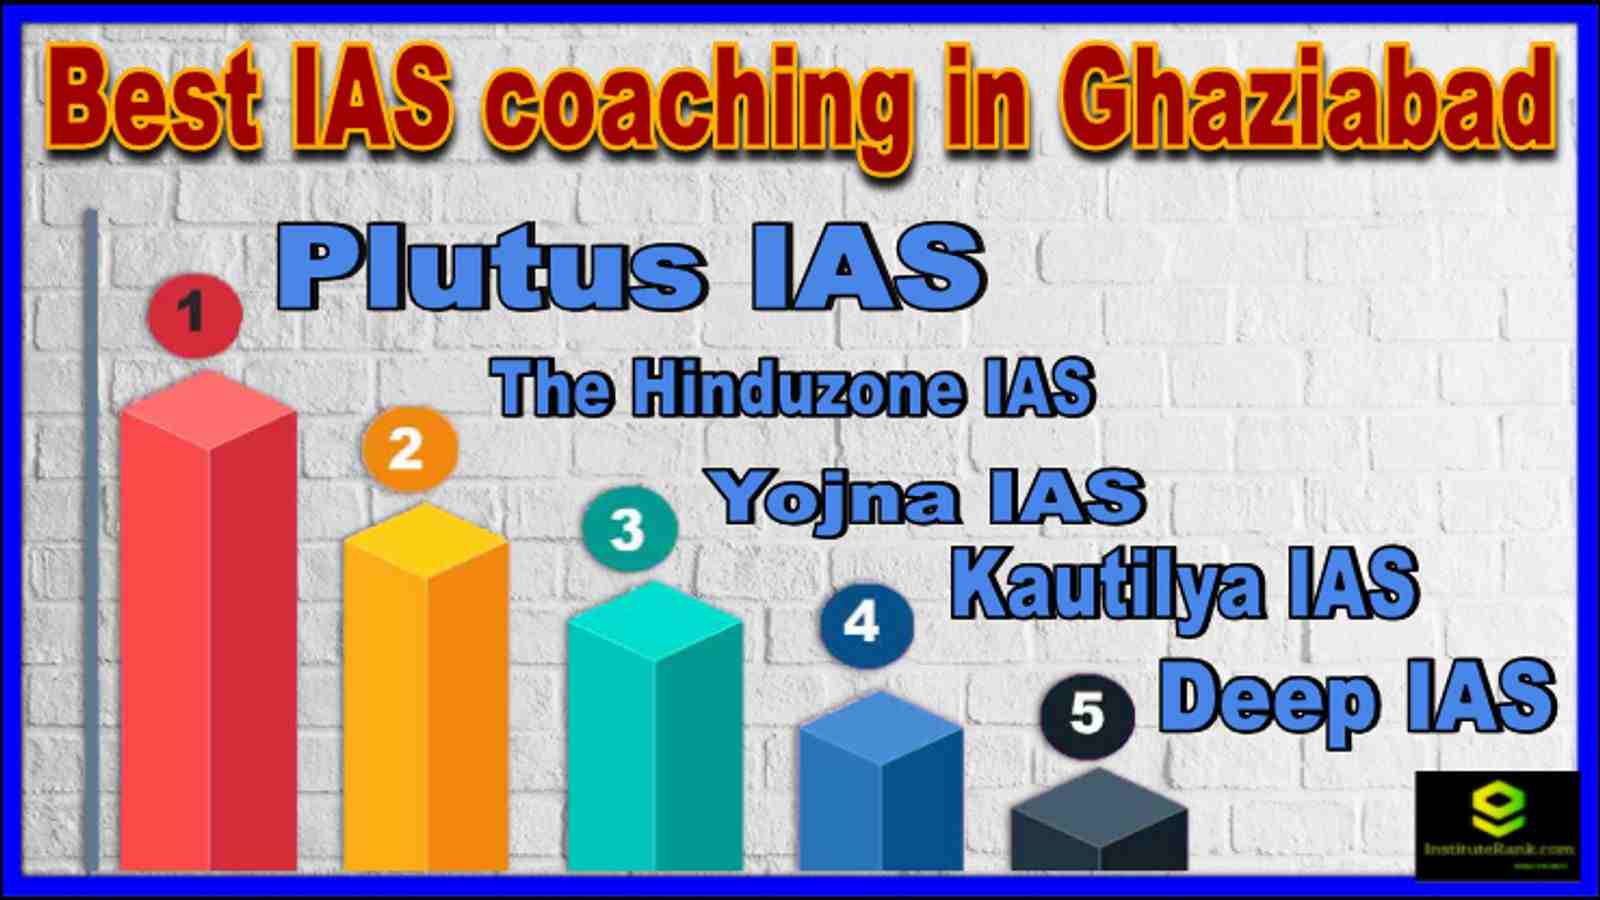 Best ias coaching in ghaziabad 